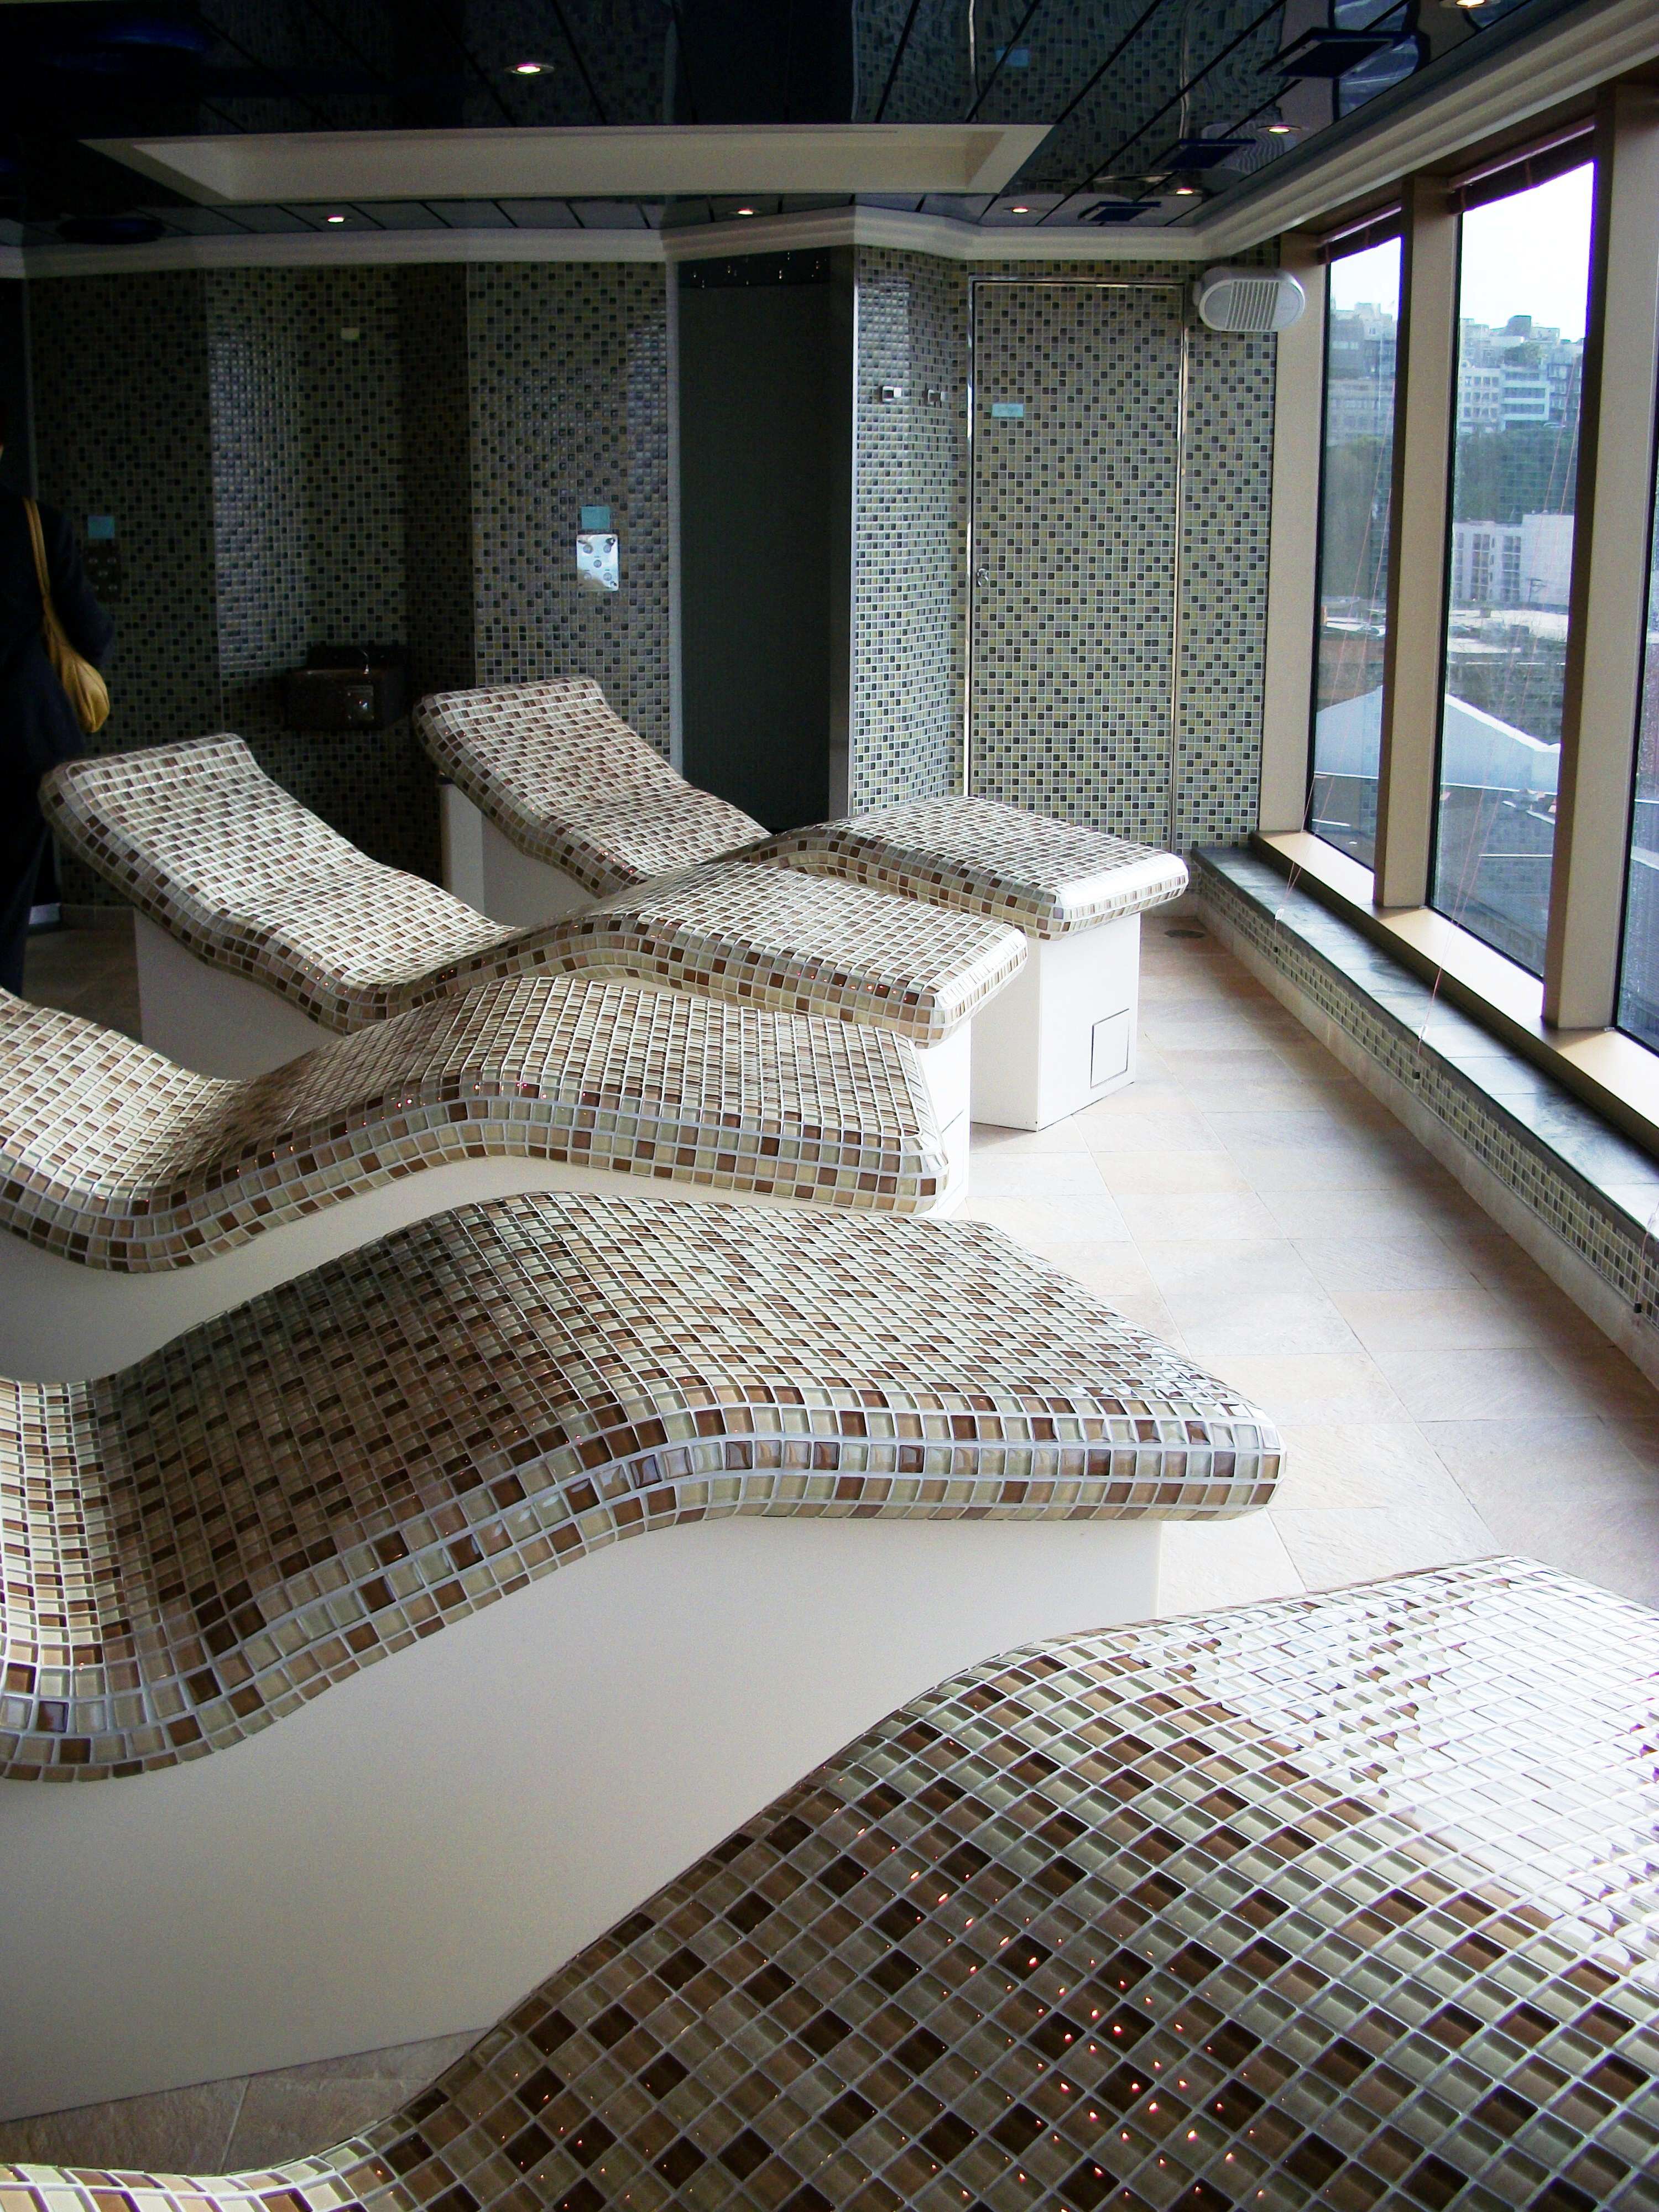 Spa - Ceramic tile heated seats